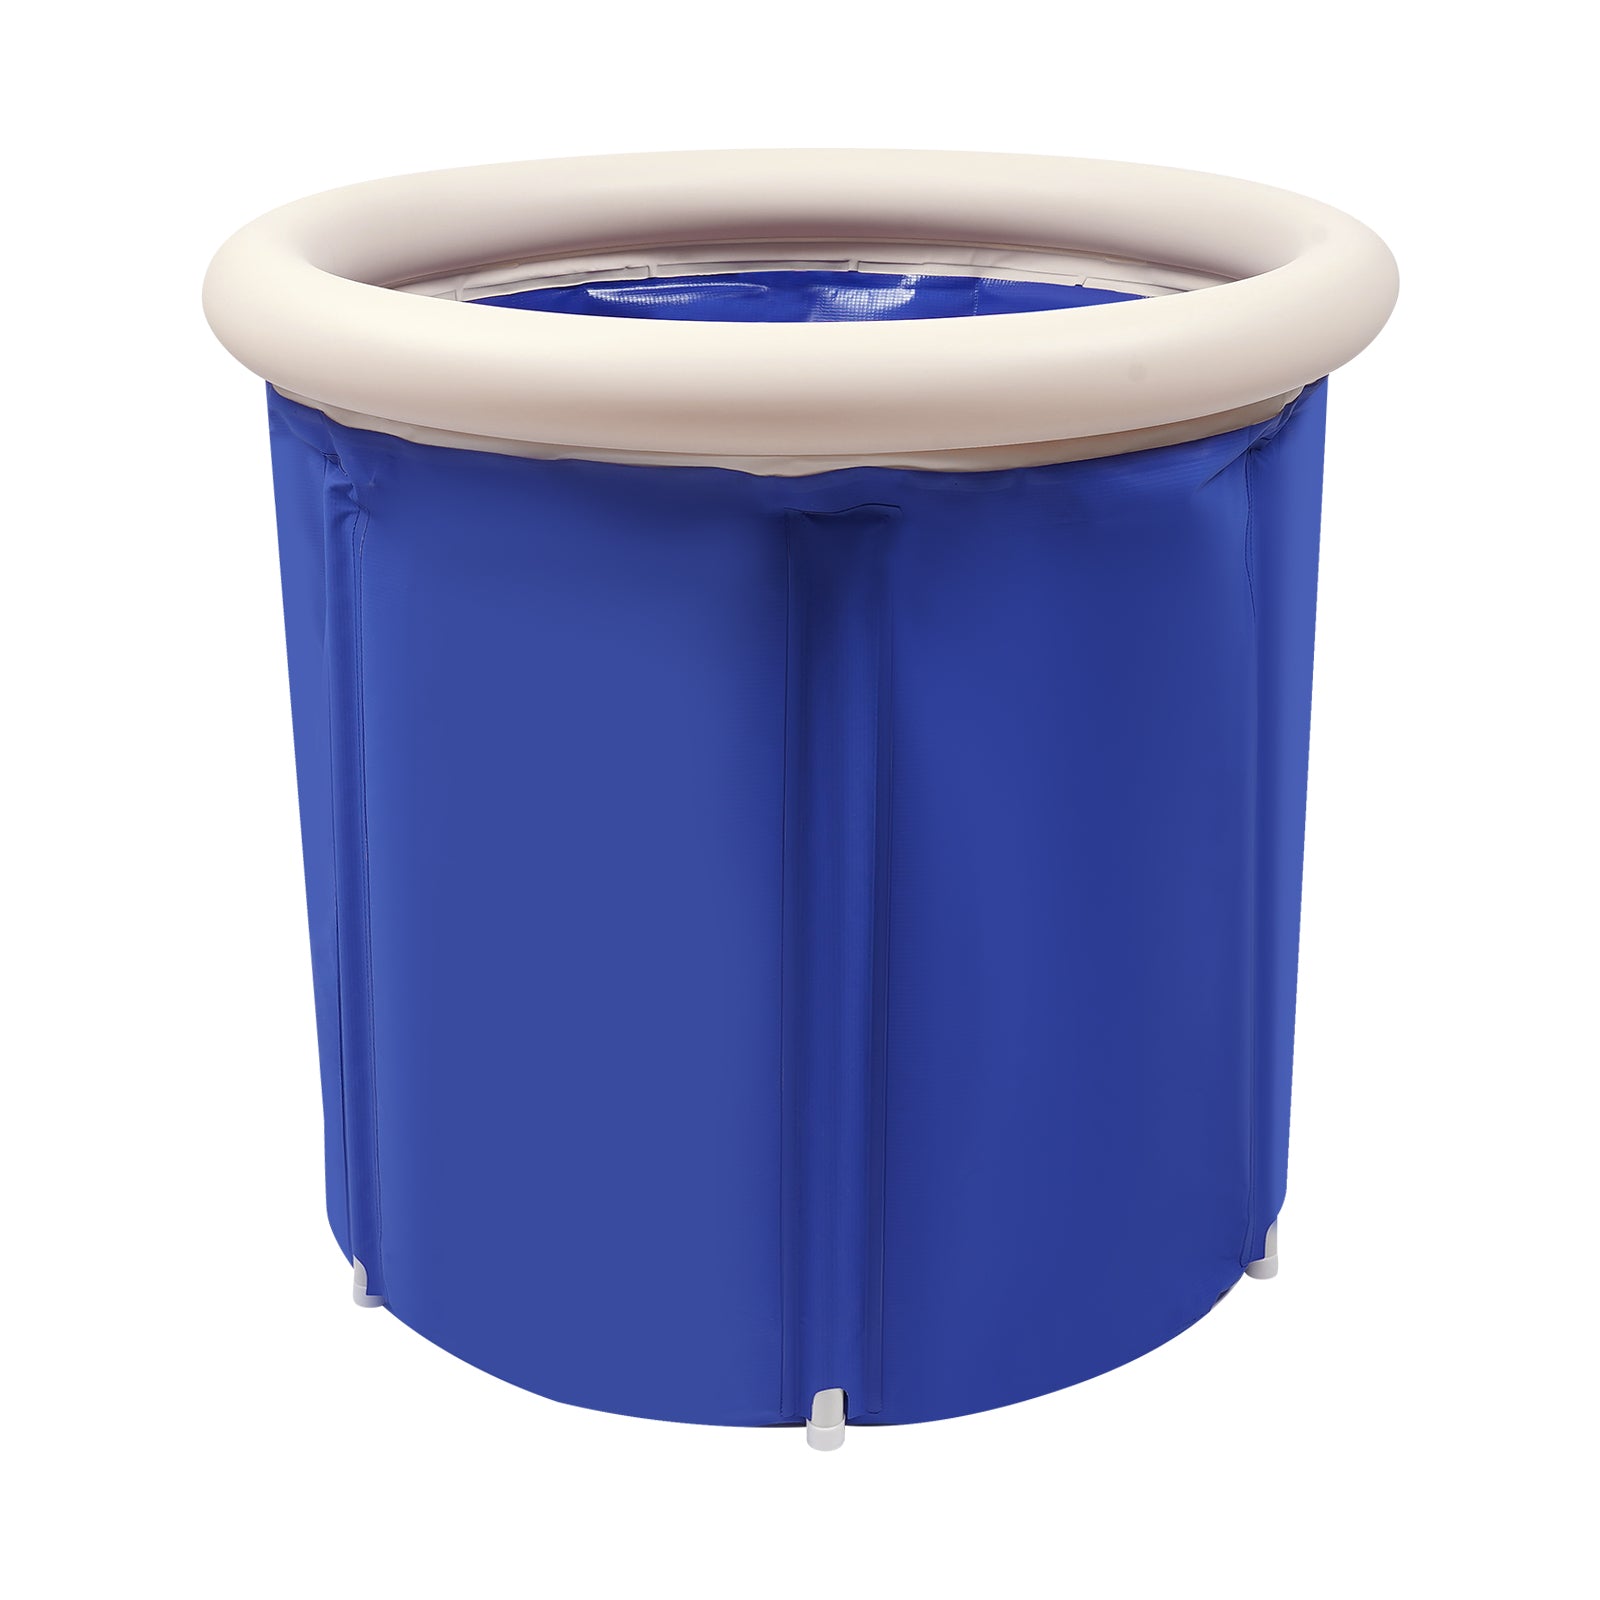 Vasca da bagno gonfiabile,vasca da bagno gonfiabile autoportante,pieghevole per adulti,6 tubi in PVC ispessiti, 70 x 70 cm, blu